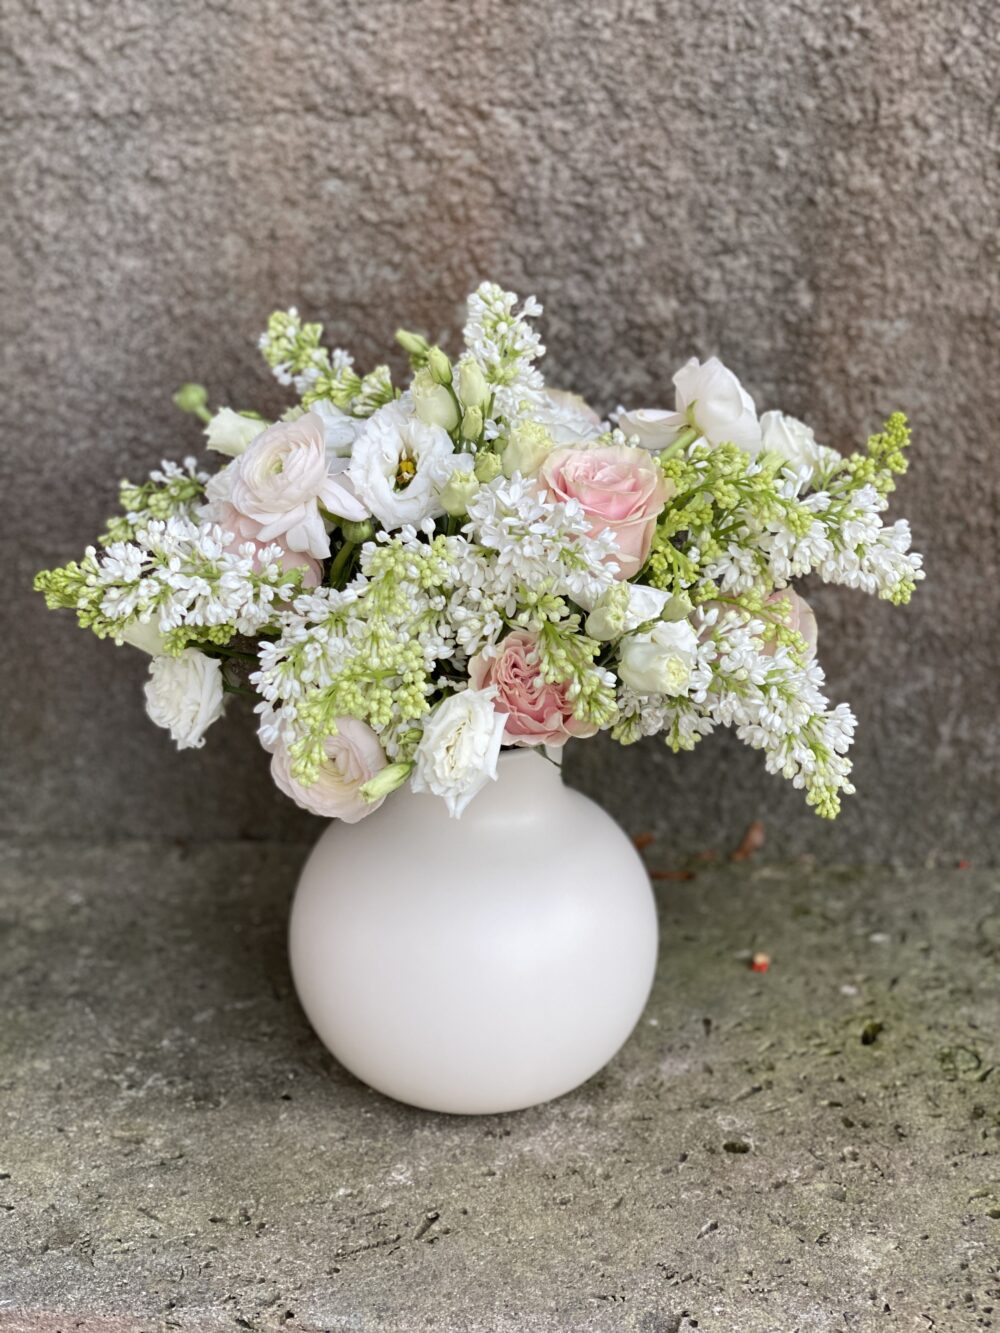 White & Blush Inspired Floral Arrangement